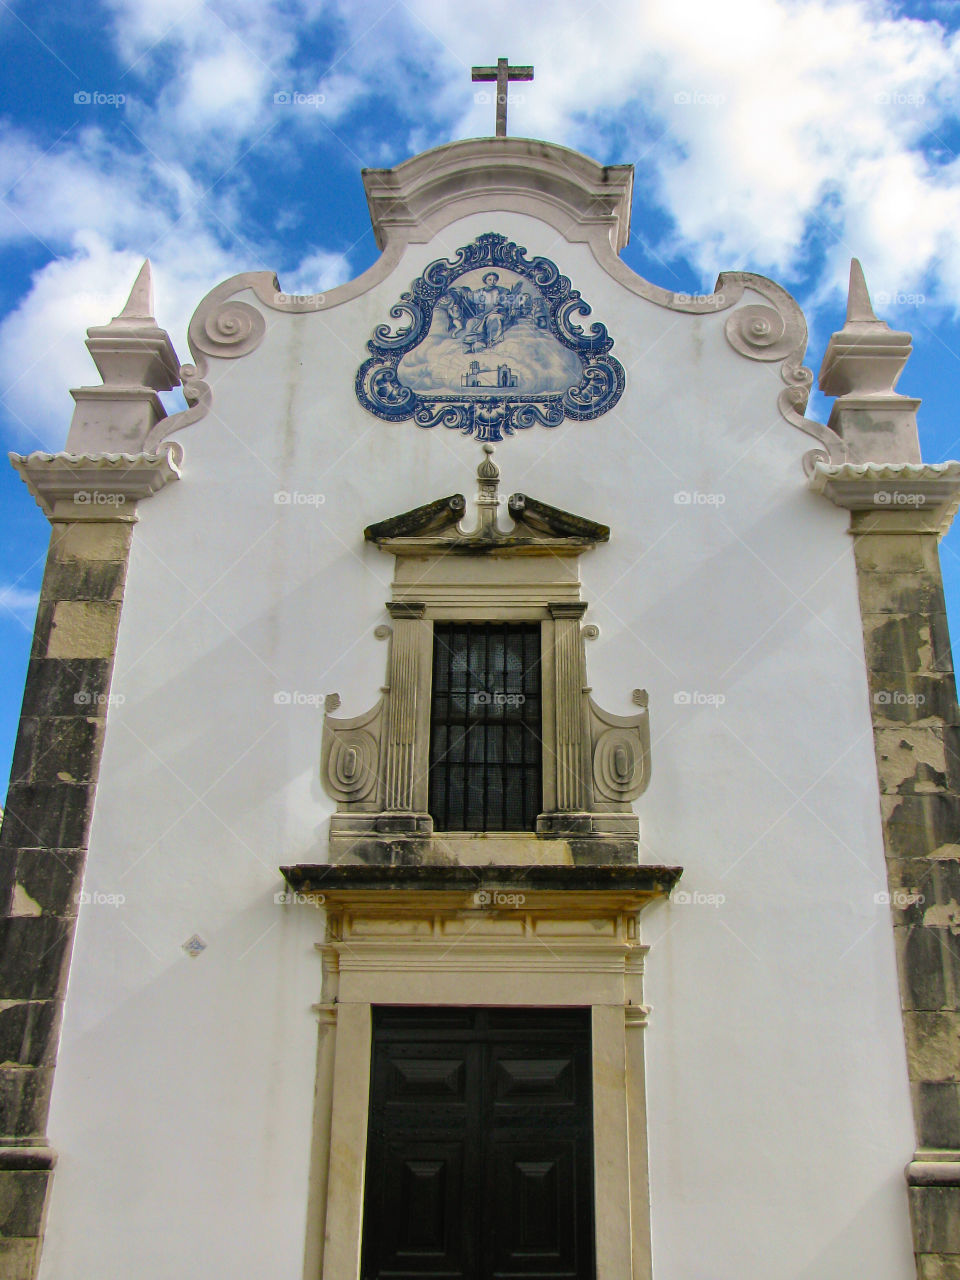 Church of Sao Lourenco, Portugal 